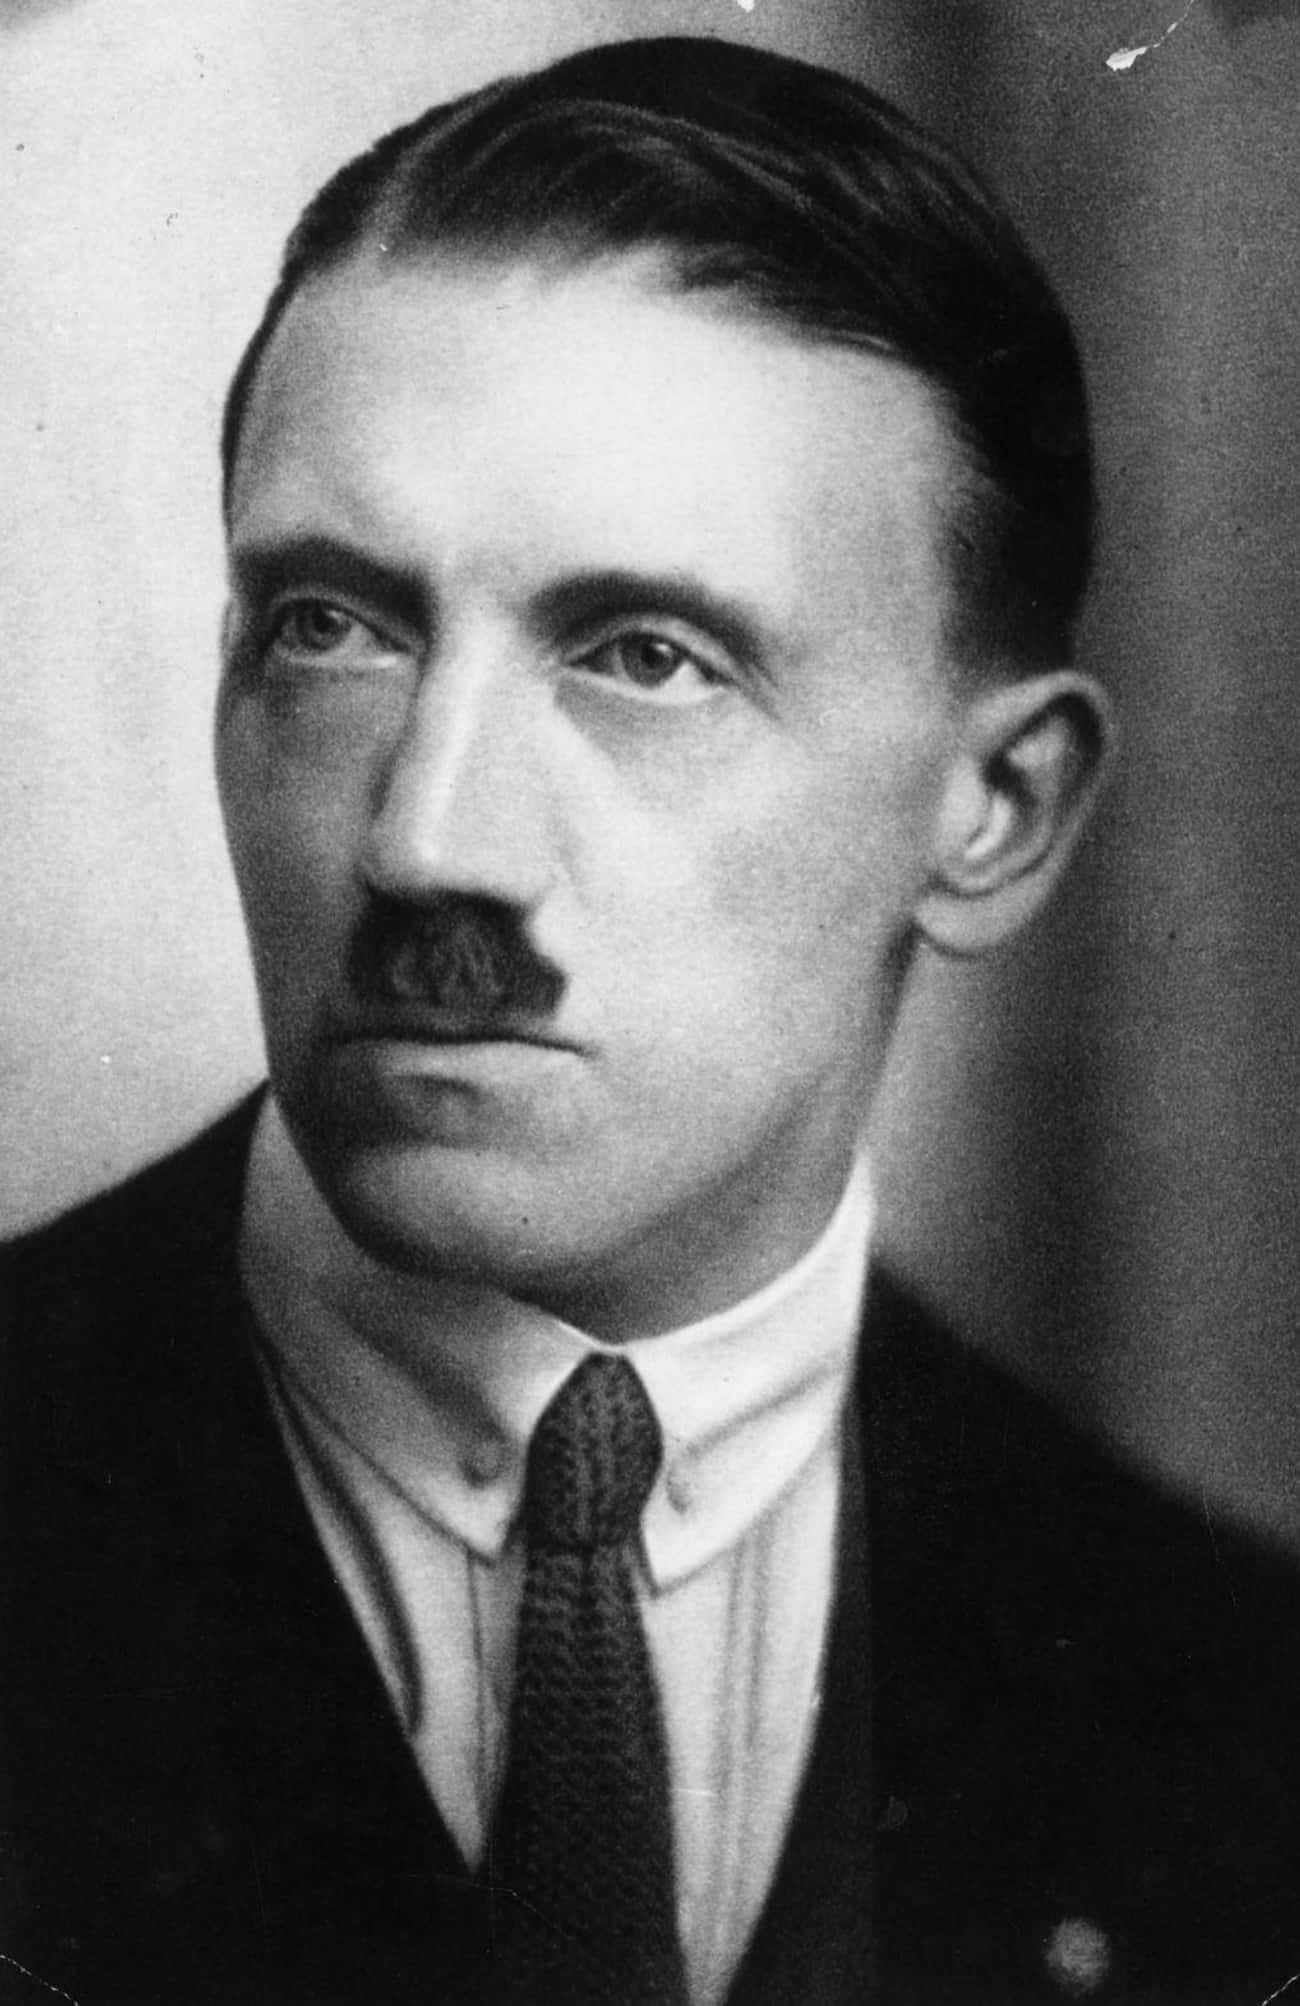 Adolf Hitler – Failed Art Student And Vagrant